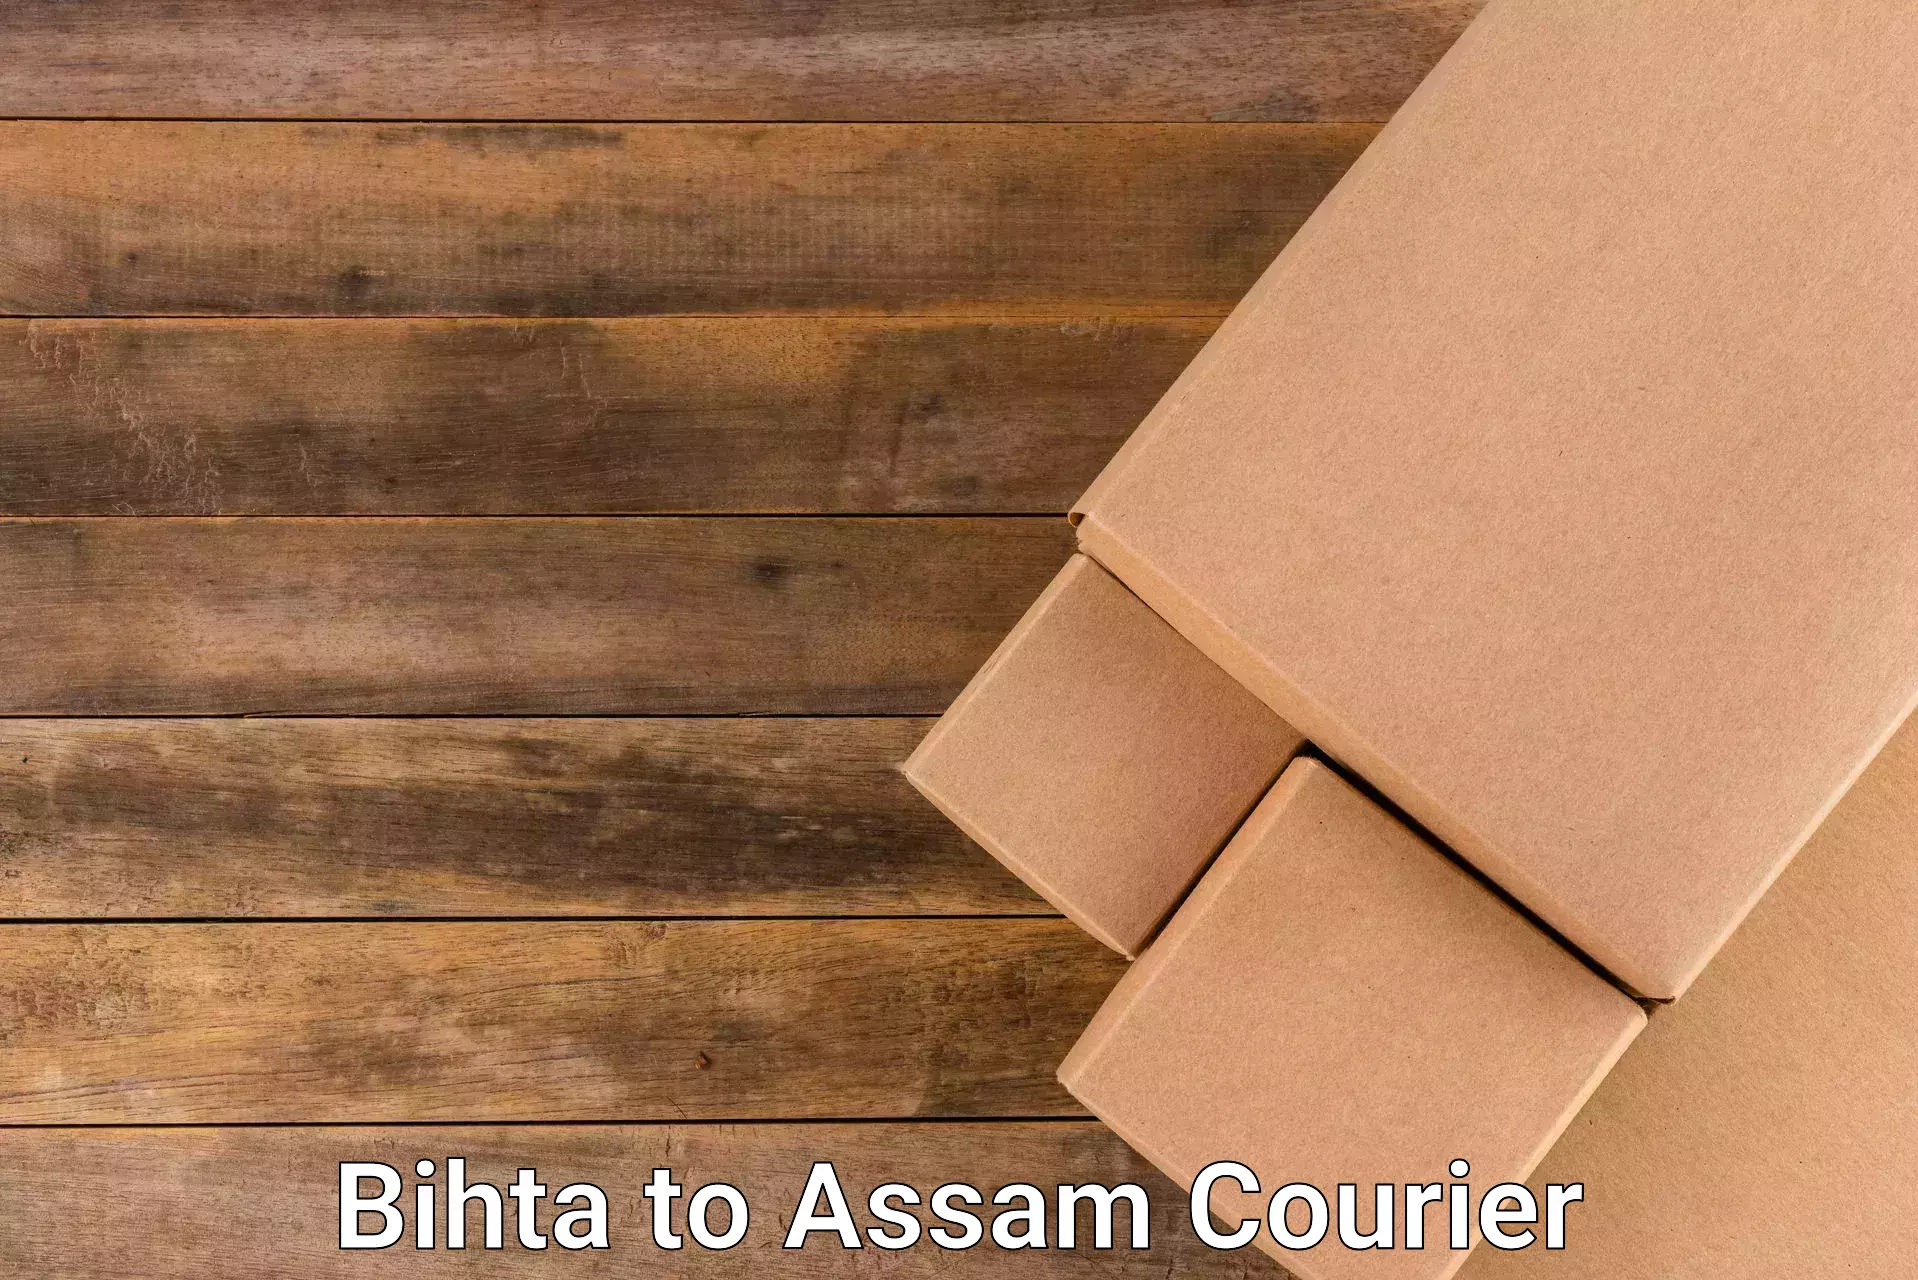 Courier tracking online Bihta to Barpeta